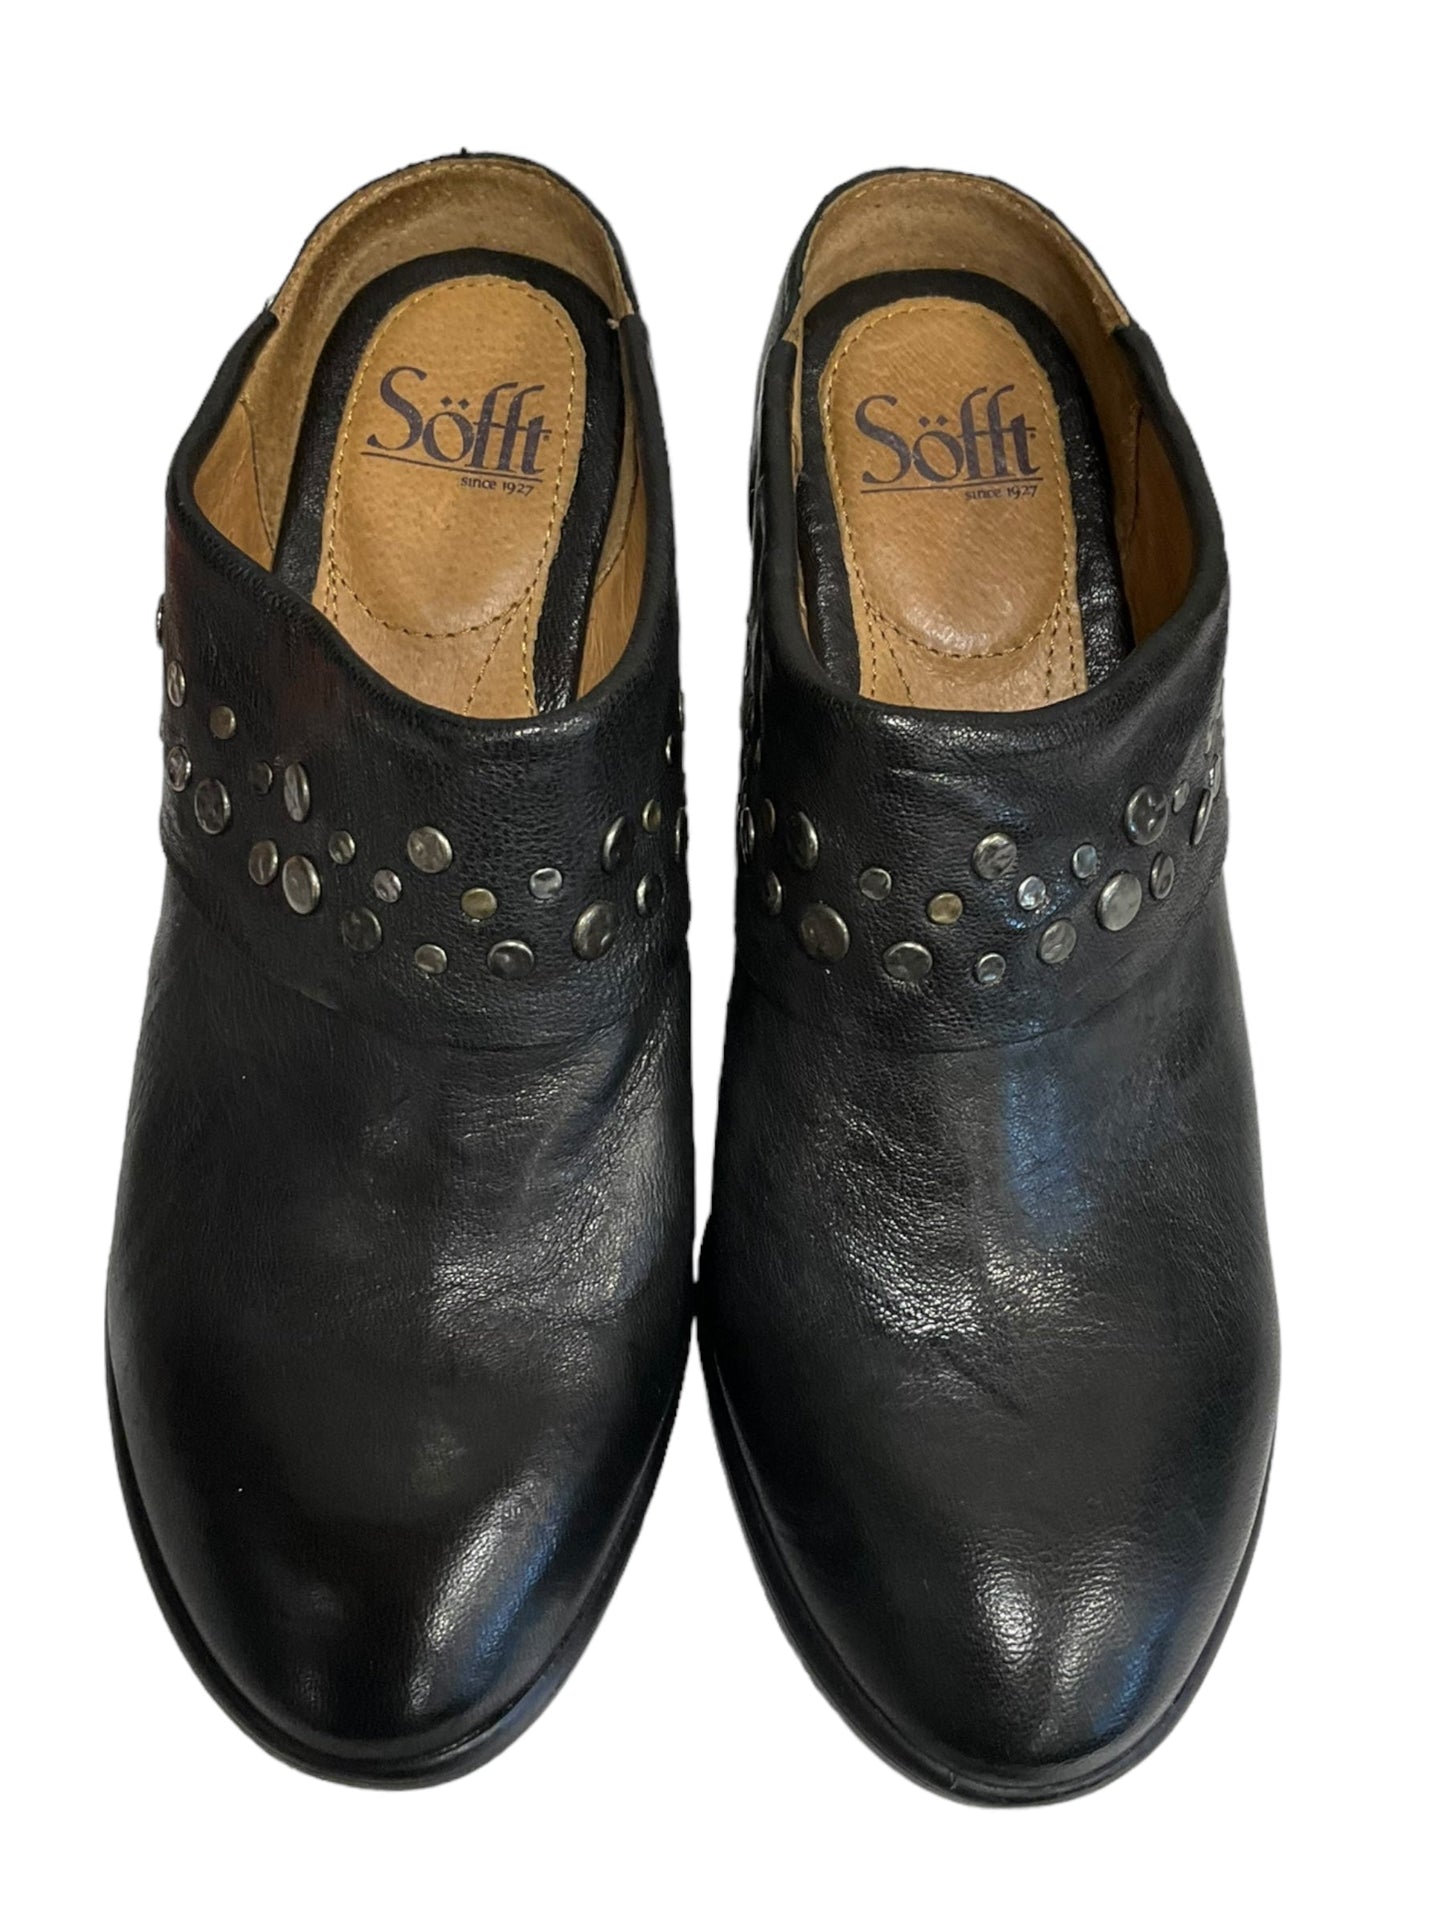 Black Shoes Heels Block Sofft, Size 7